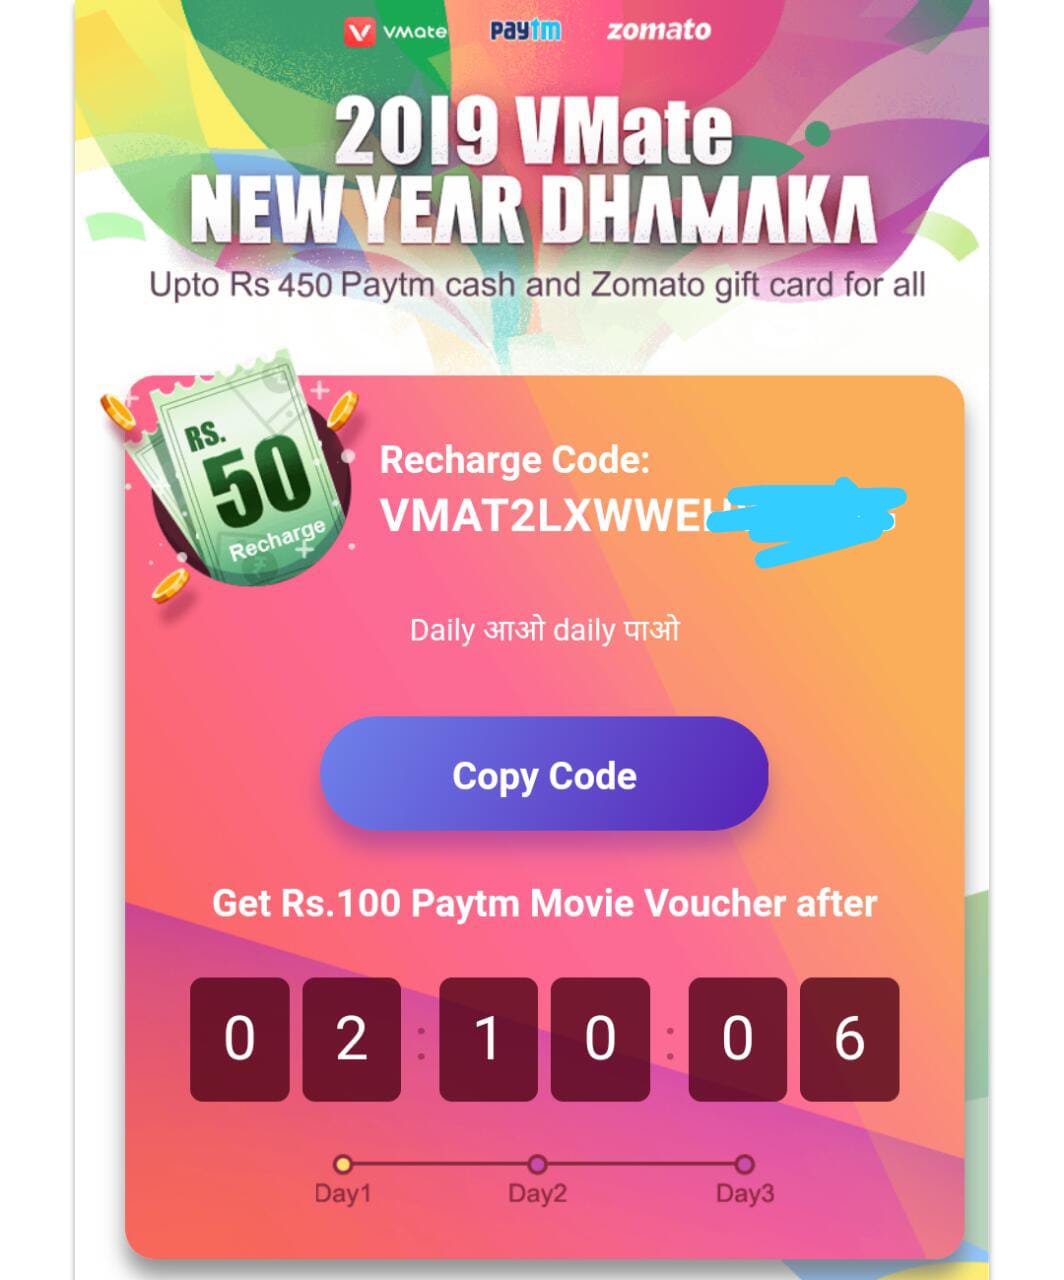 paytm app recharge offer